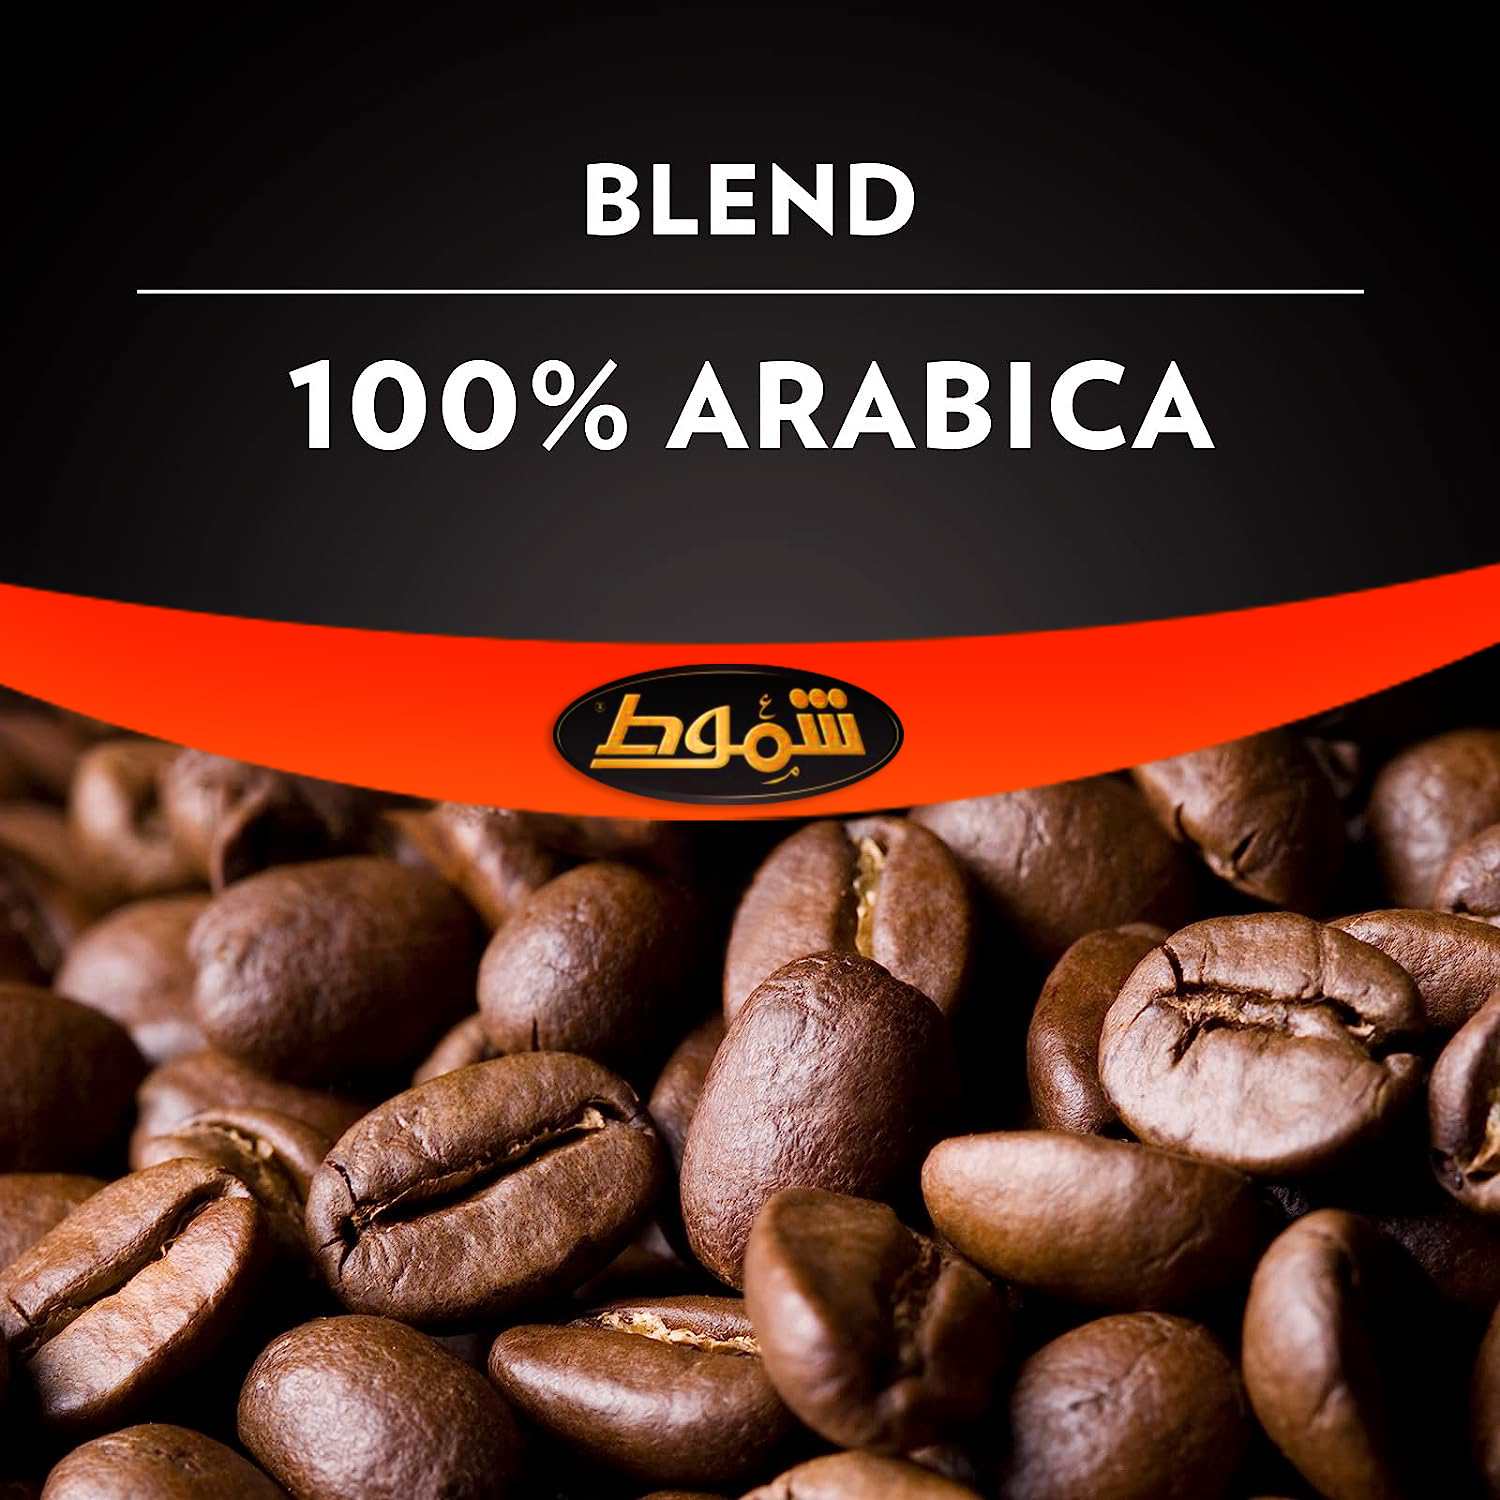 Shammout Saudi Arabian Golden Instant Arabica Coffee, Packets, Powder, Roasted Ground Coffee, Organic, Arabica Beans, Rich with Cardamom and Saffron Flavor, Eco-friendly Coffee, Gluten Free, Non GMO, Vegan, 10 Sachets - (0.48 lbs), 220g